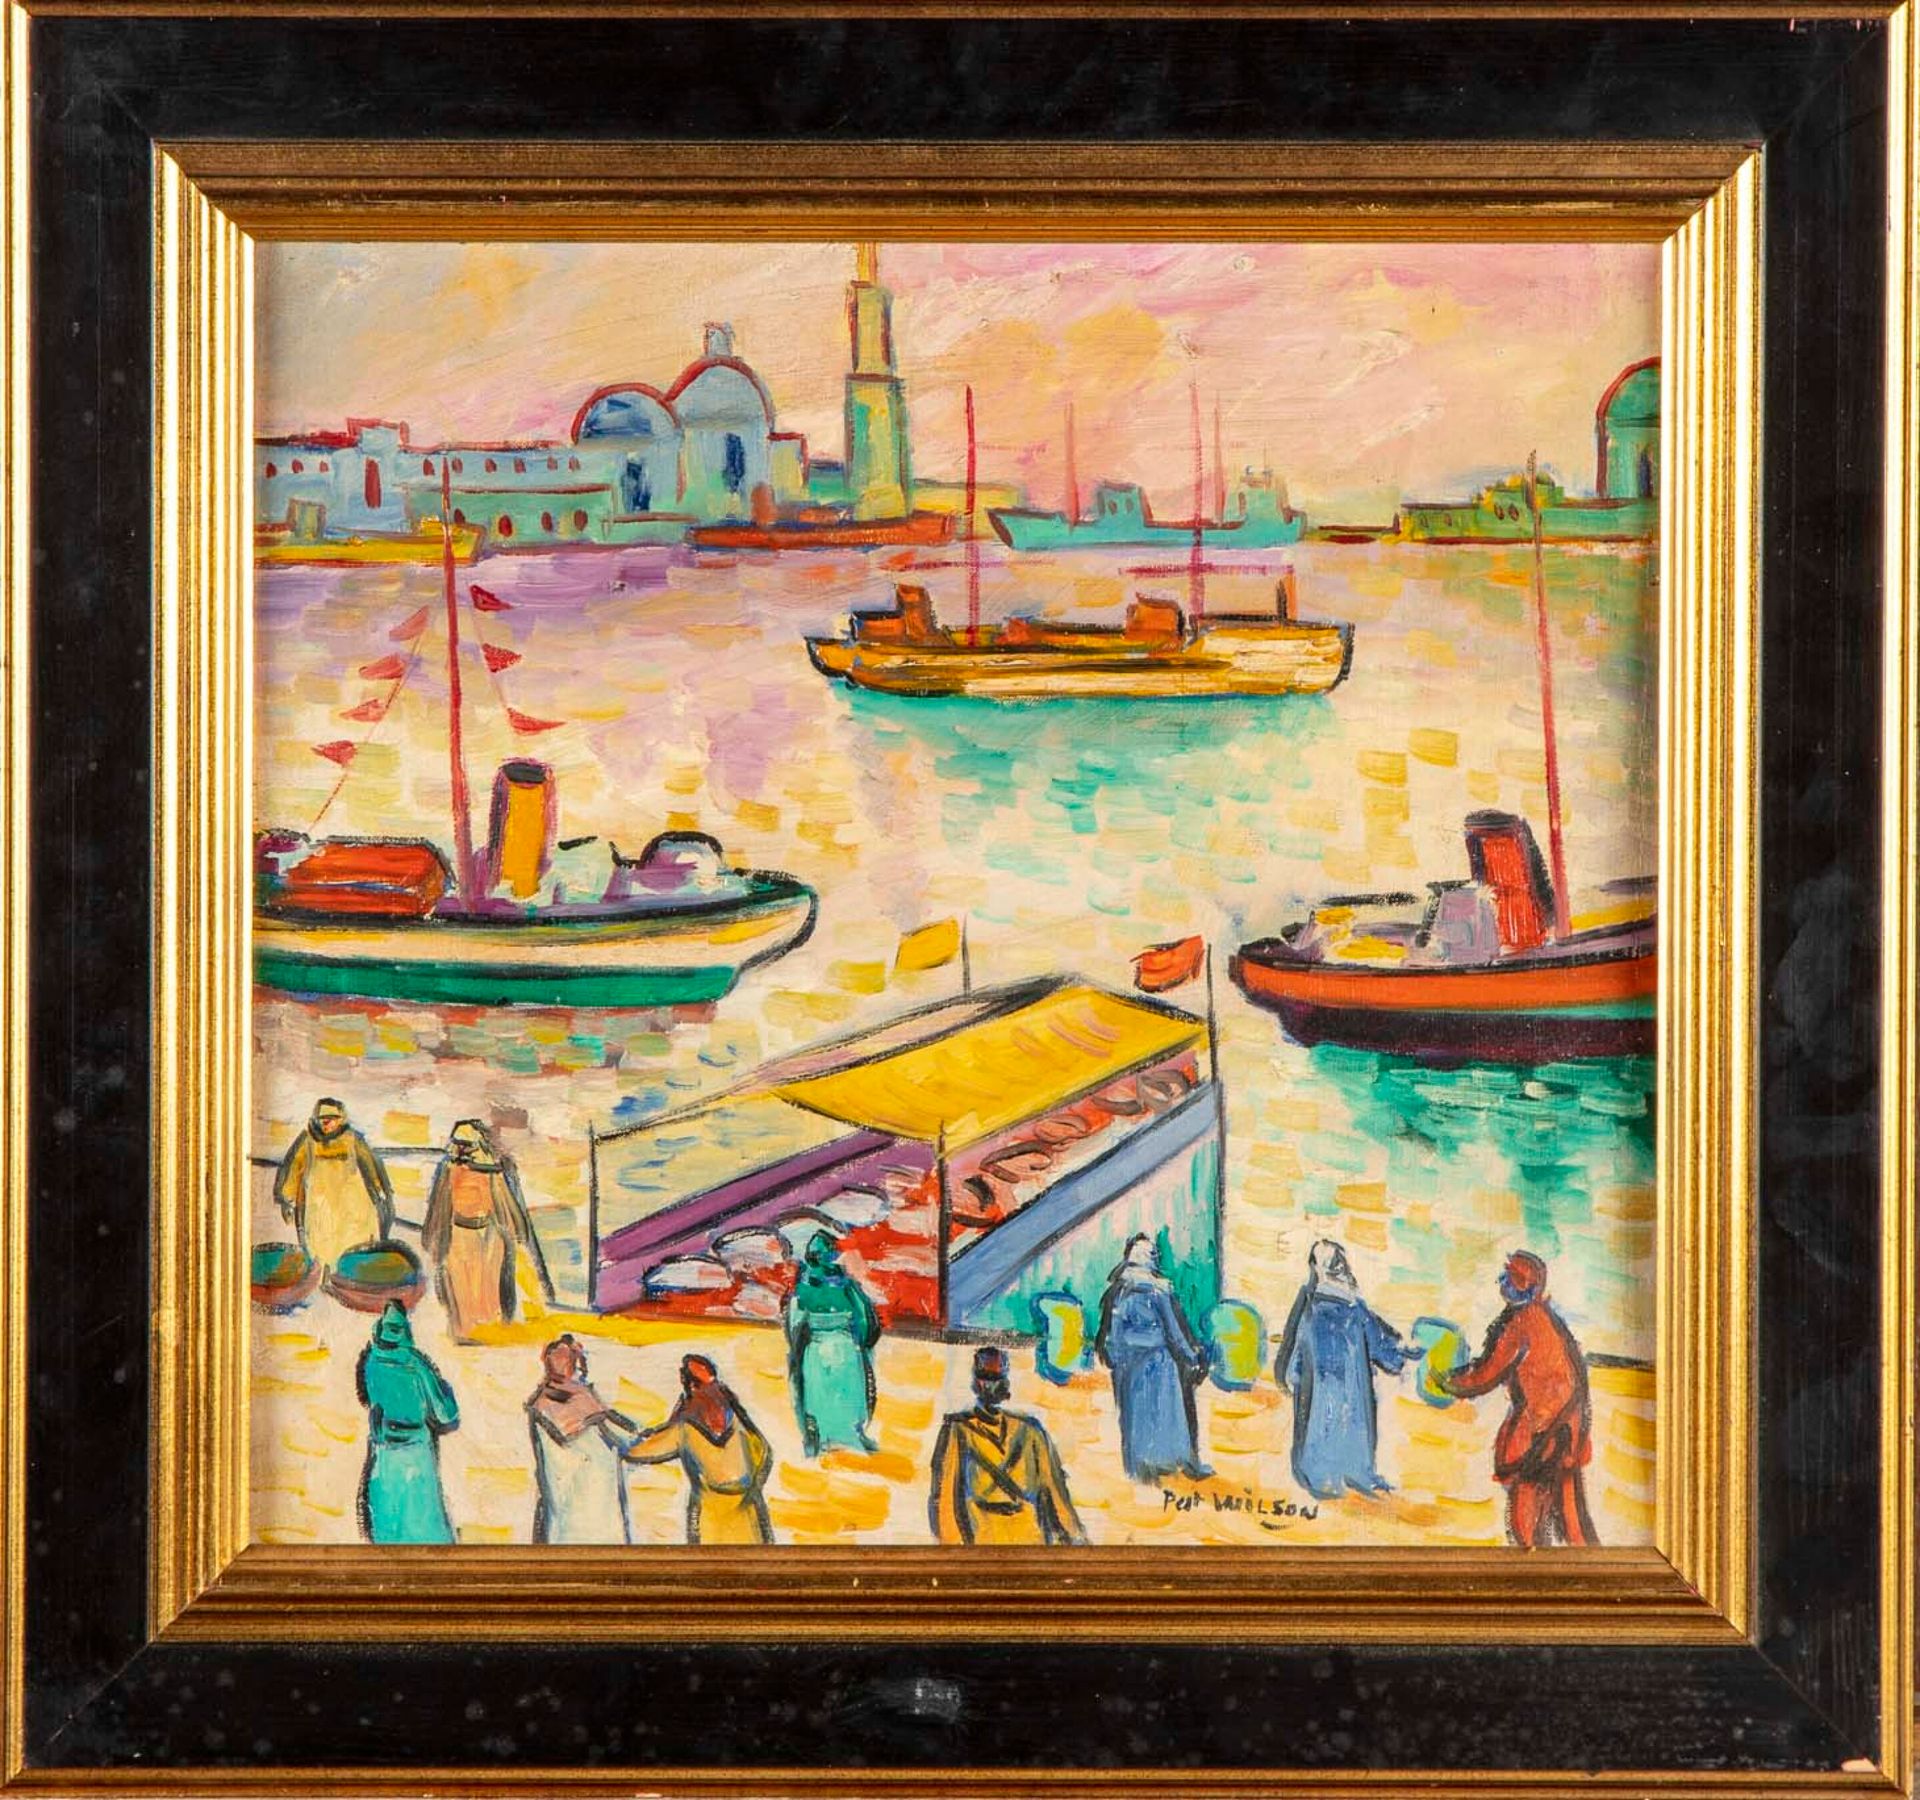 PAT WILSON 帕特-威尔逊(1868-1928)

阿尔及尔港

布面油画

右下方有签名

有框

38 x 40 厘米